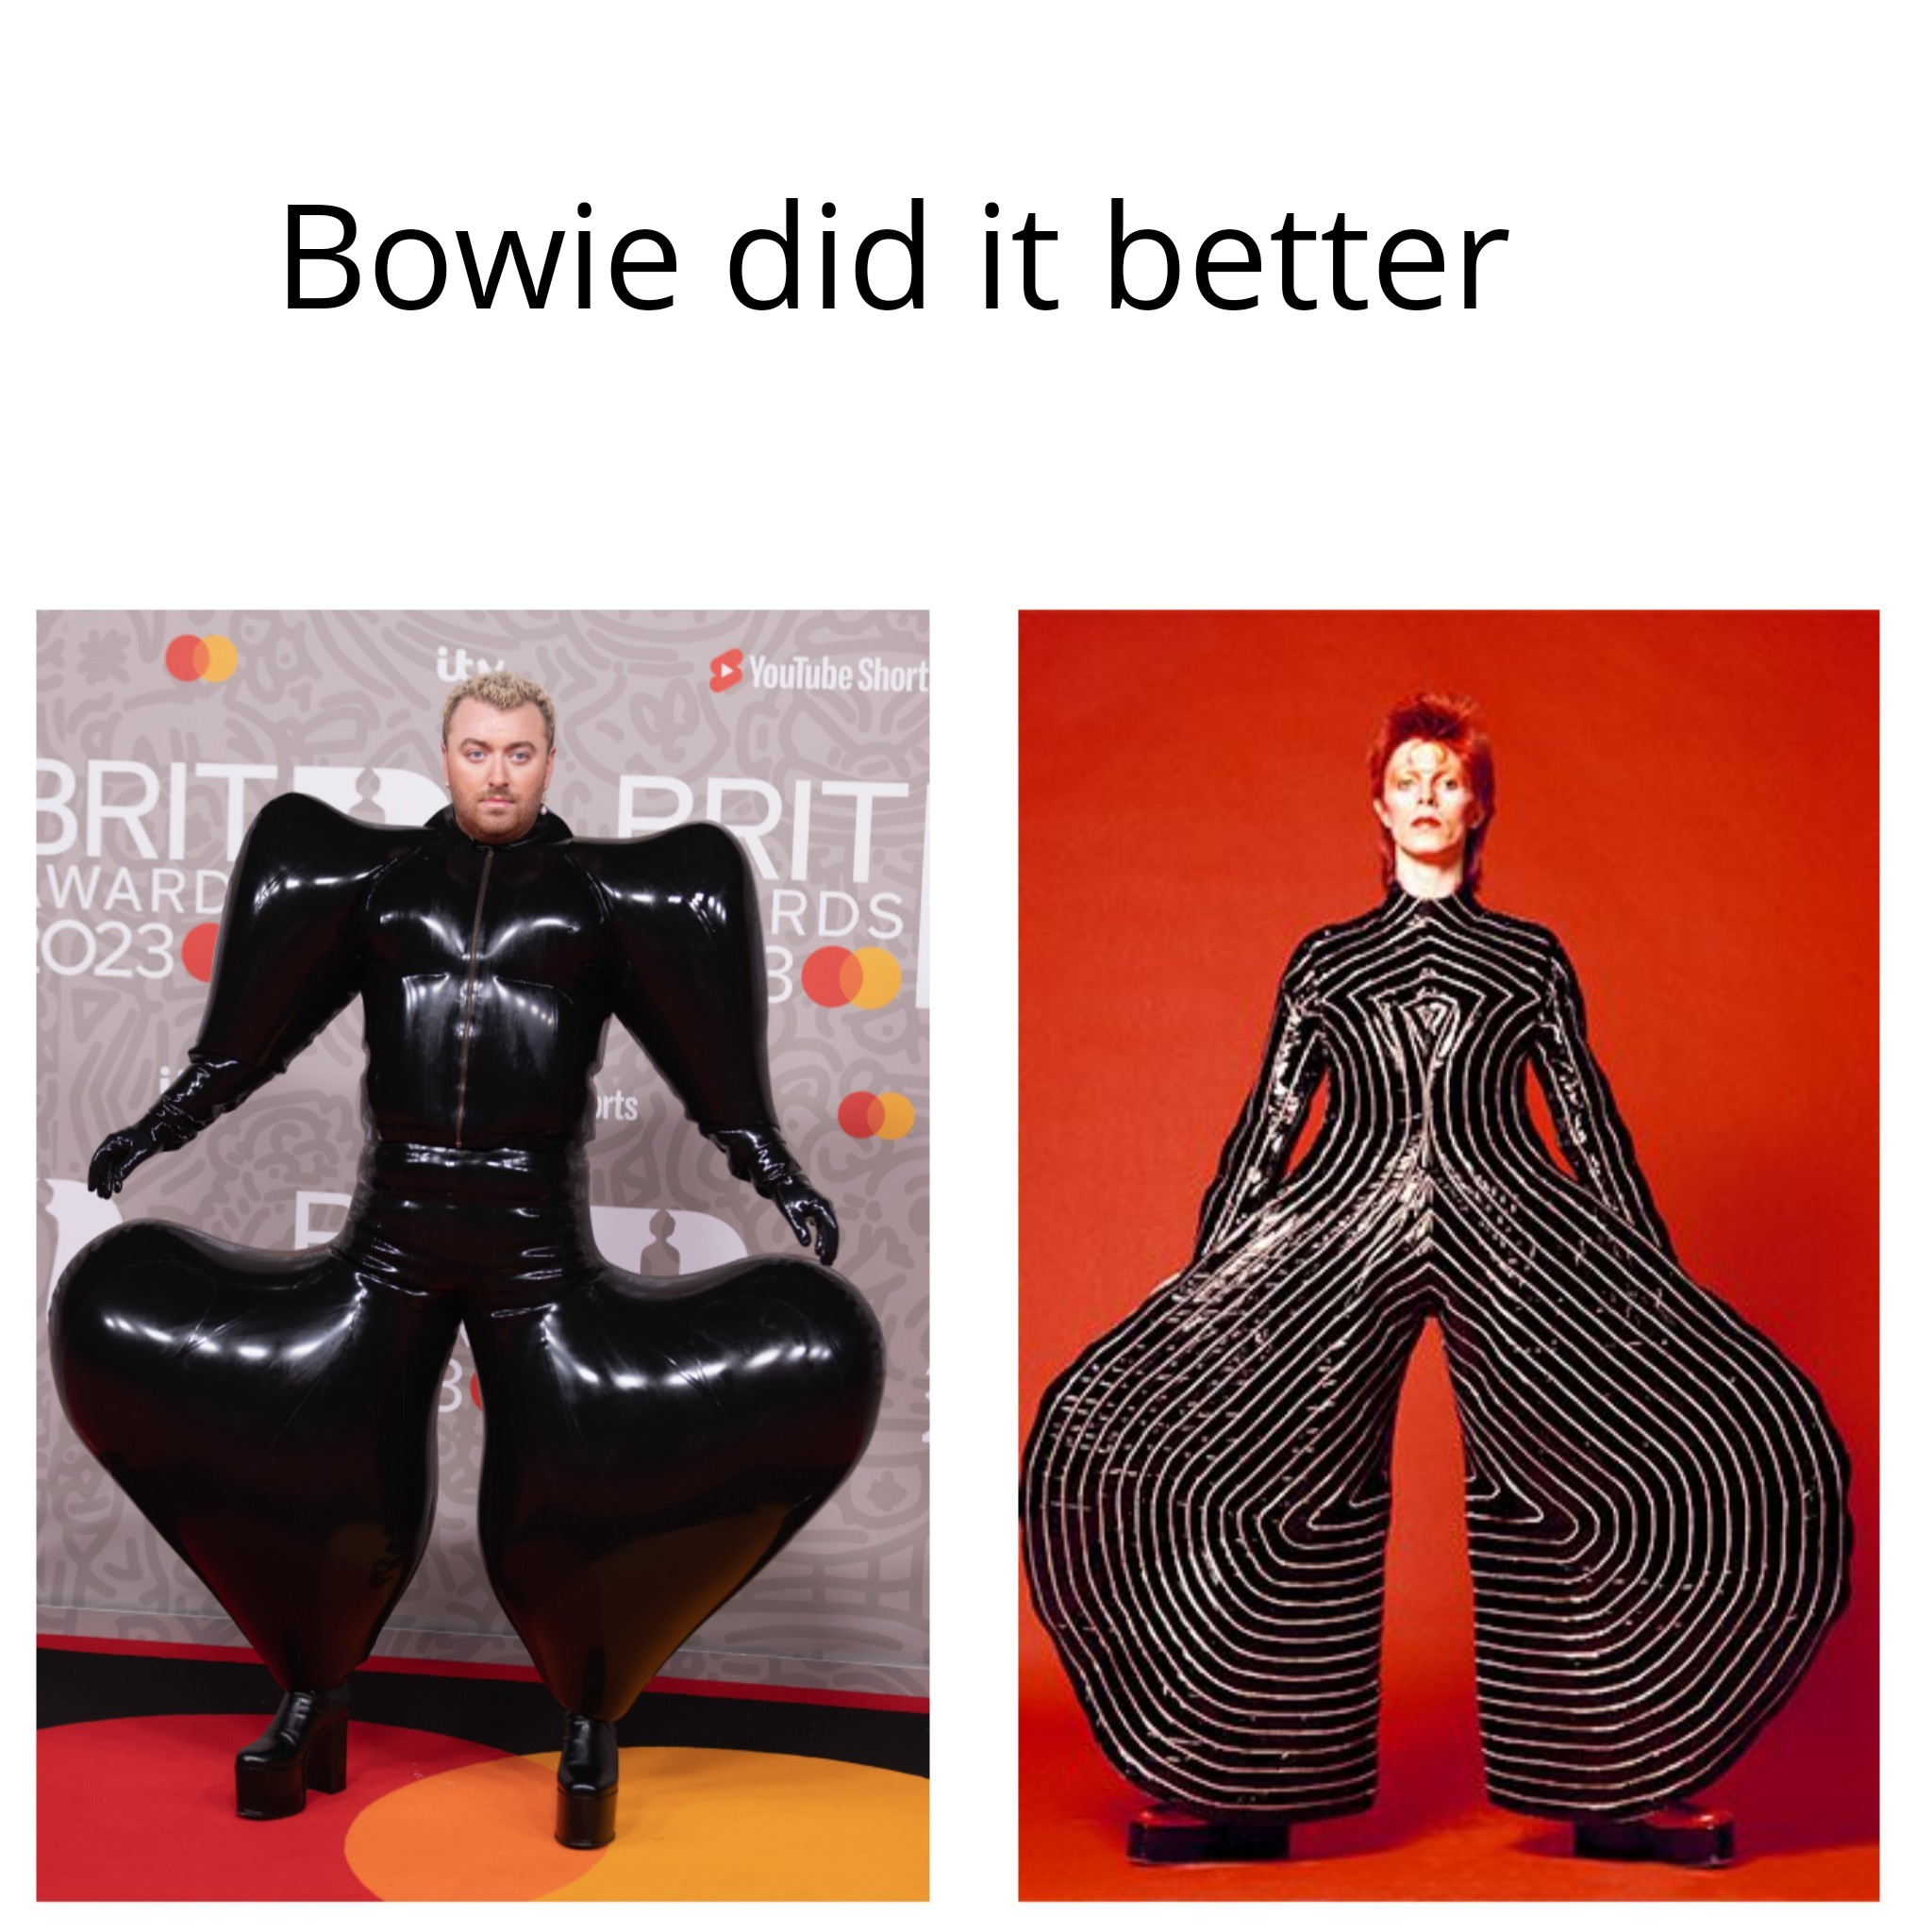 dank memes - david bowie fashion - Bowie did it better Brit Ward 023 Youde Shor Prit Rds